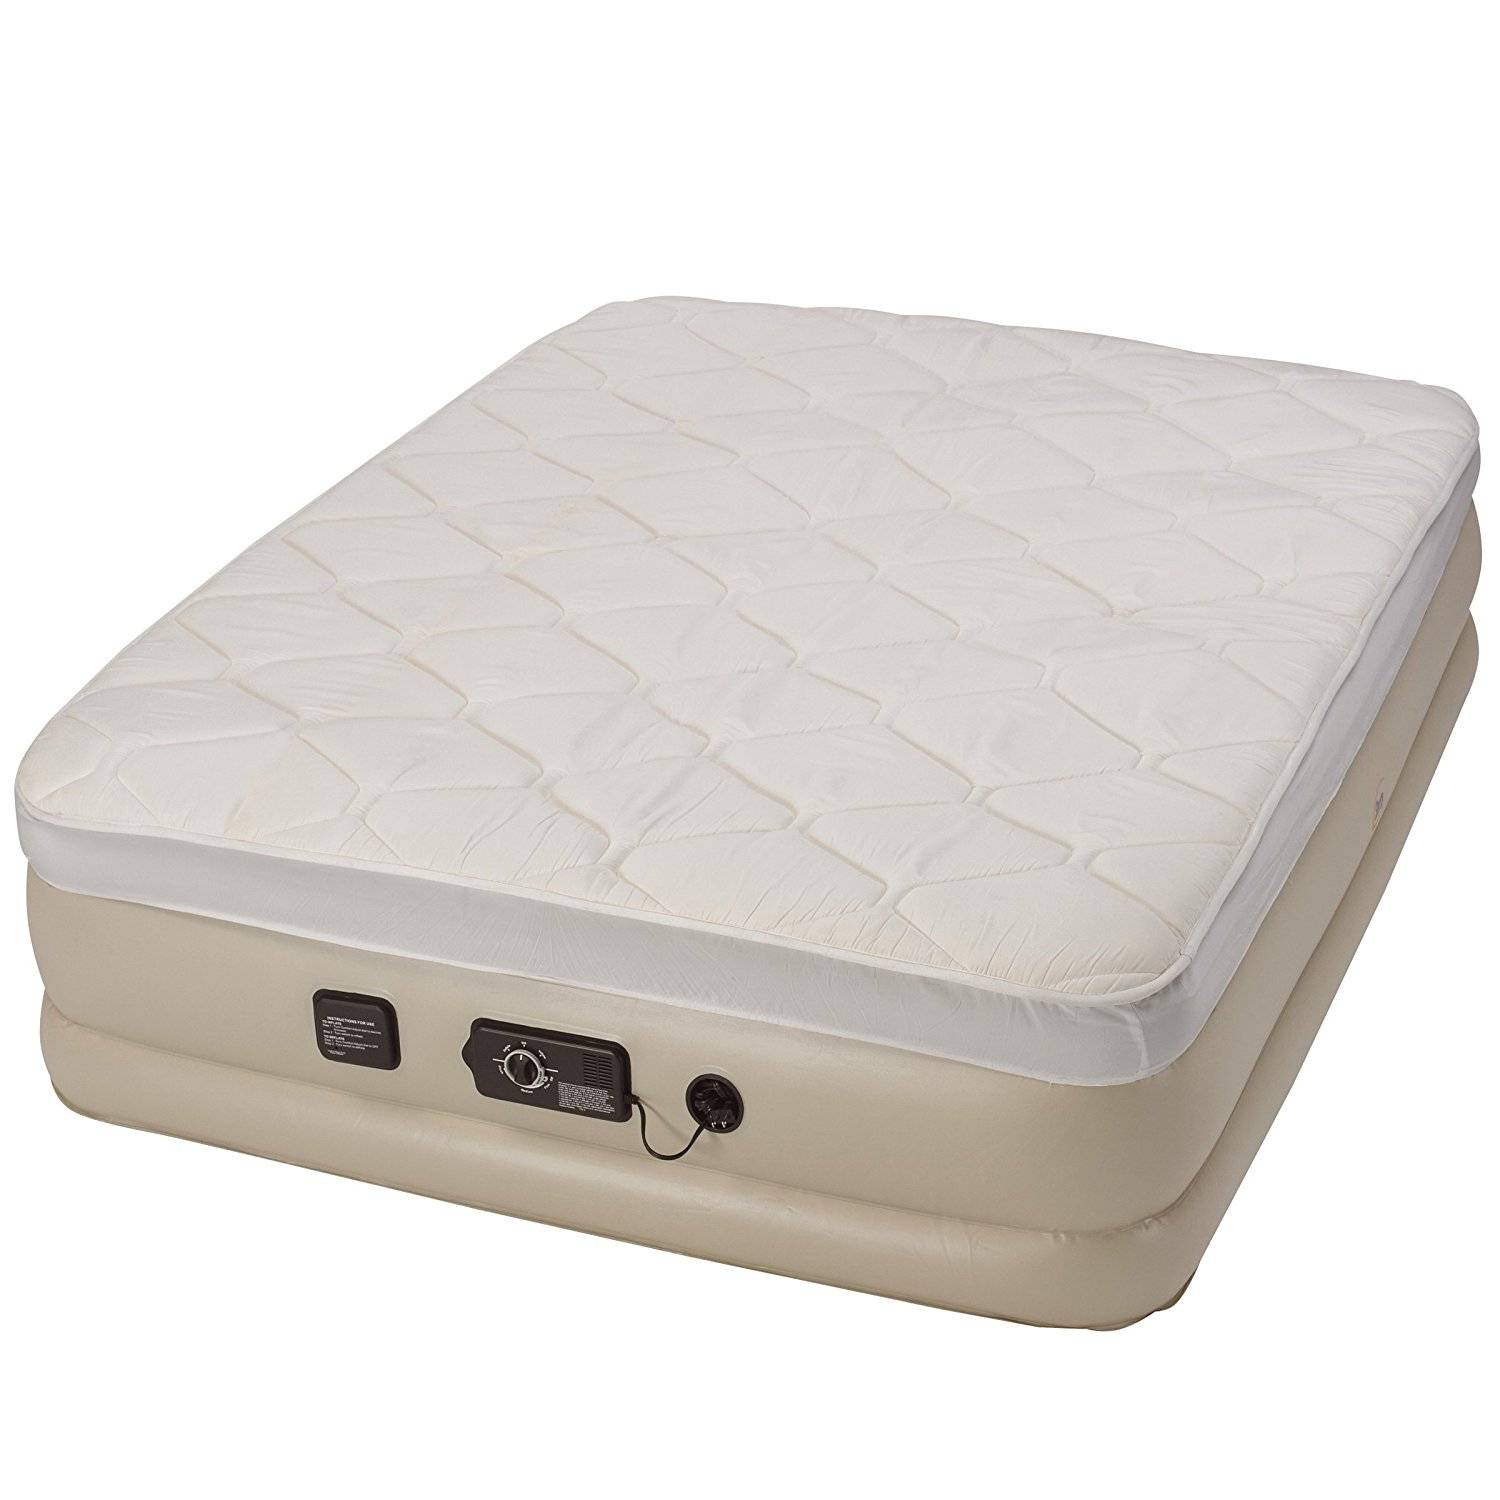 Serta Raised Air Bed Mattress with Never Flat Pump